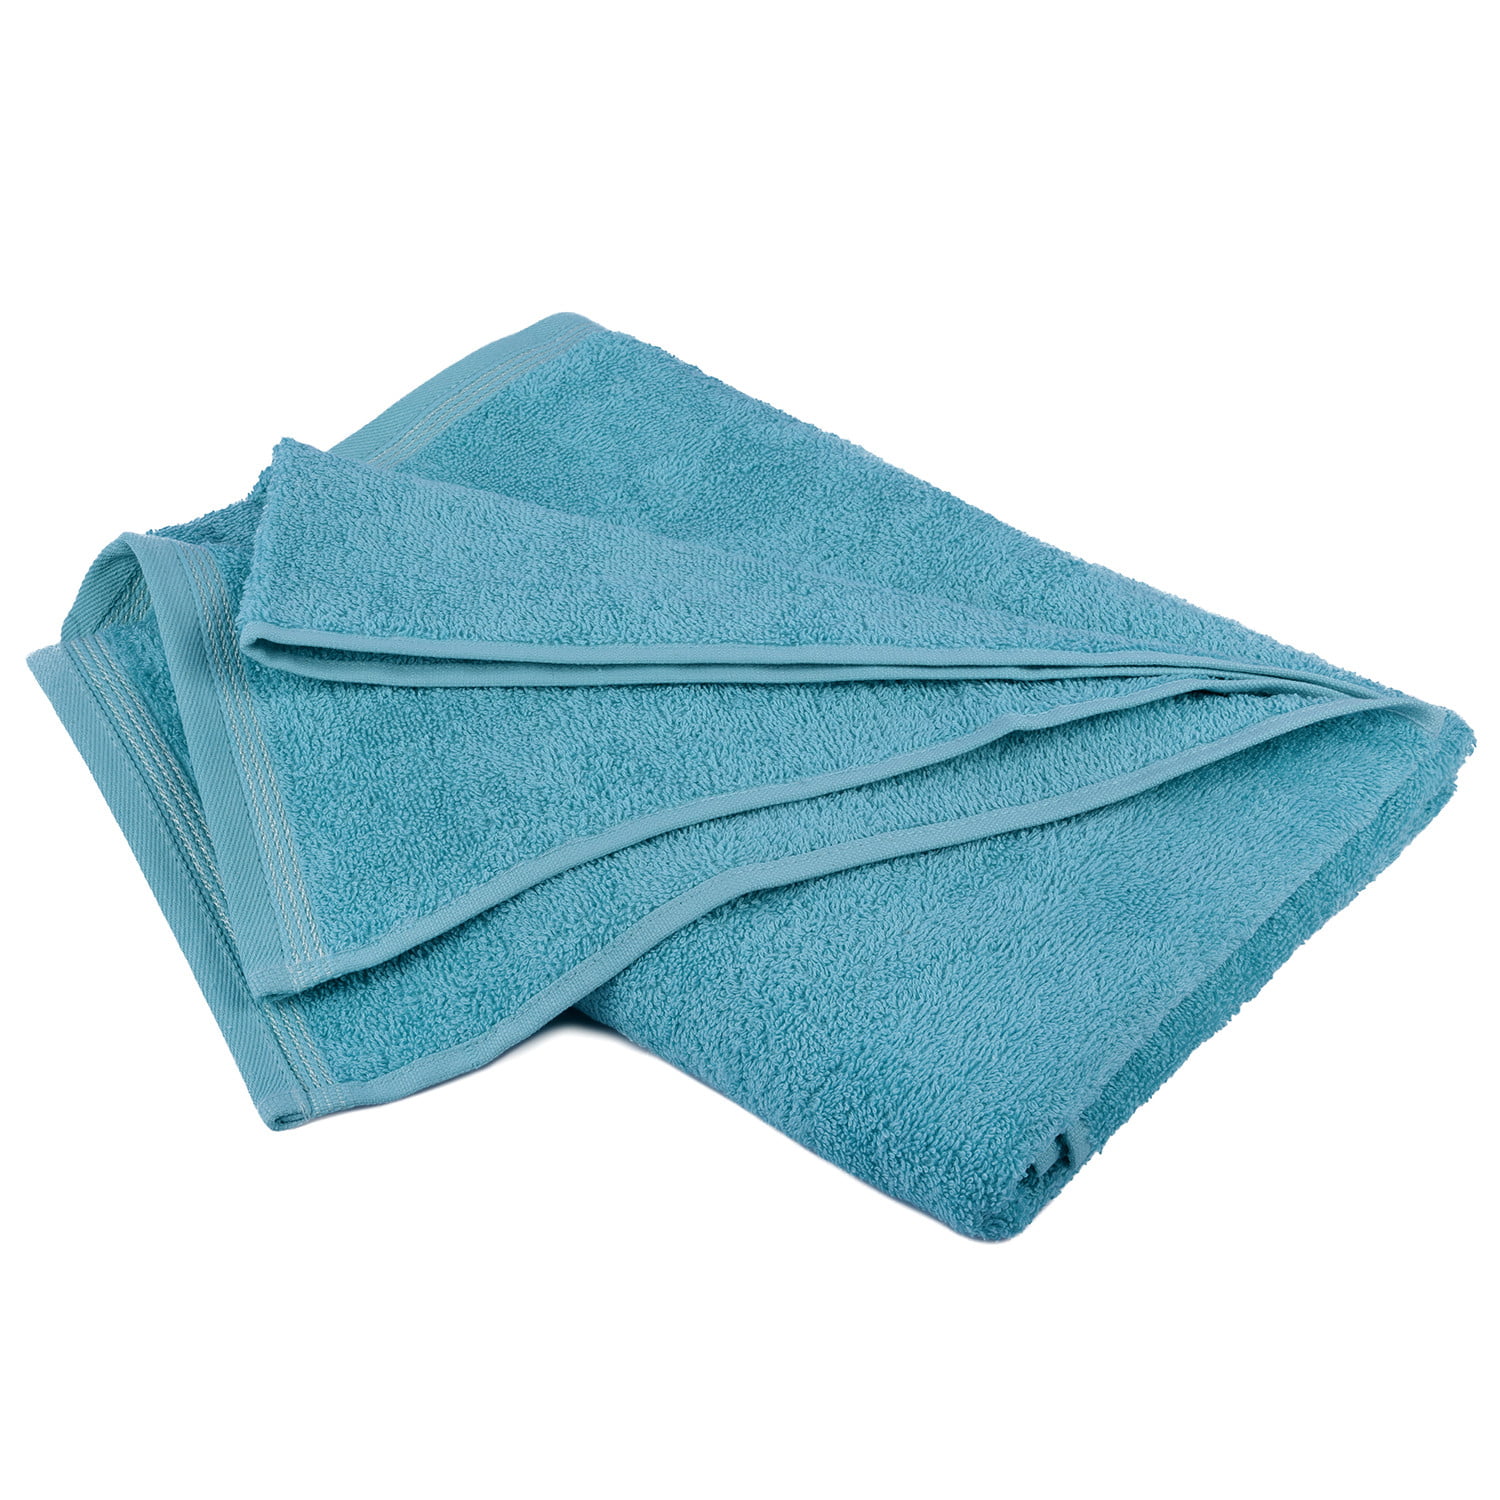 STP Goods Tamara Turkish Cotton Towels Set of 2 - N/A Royal Blue